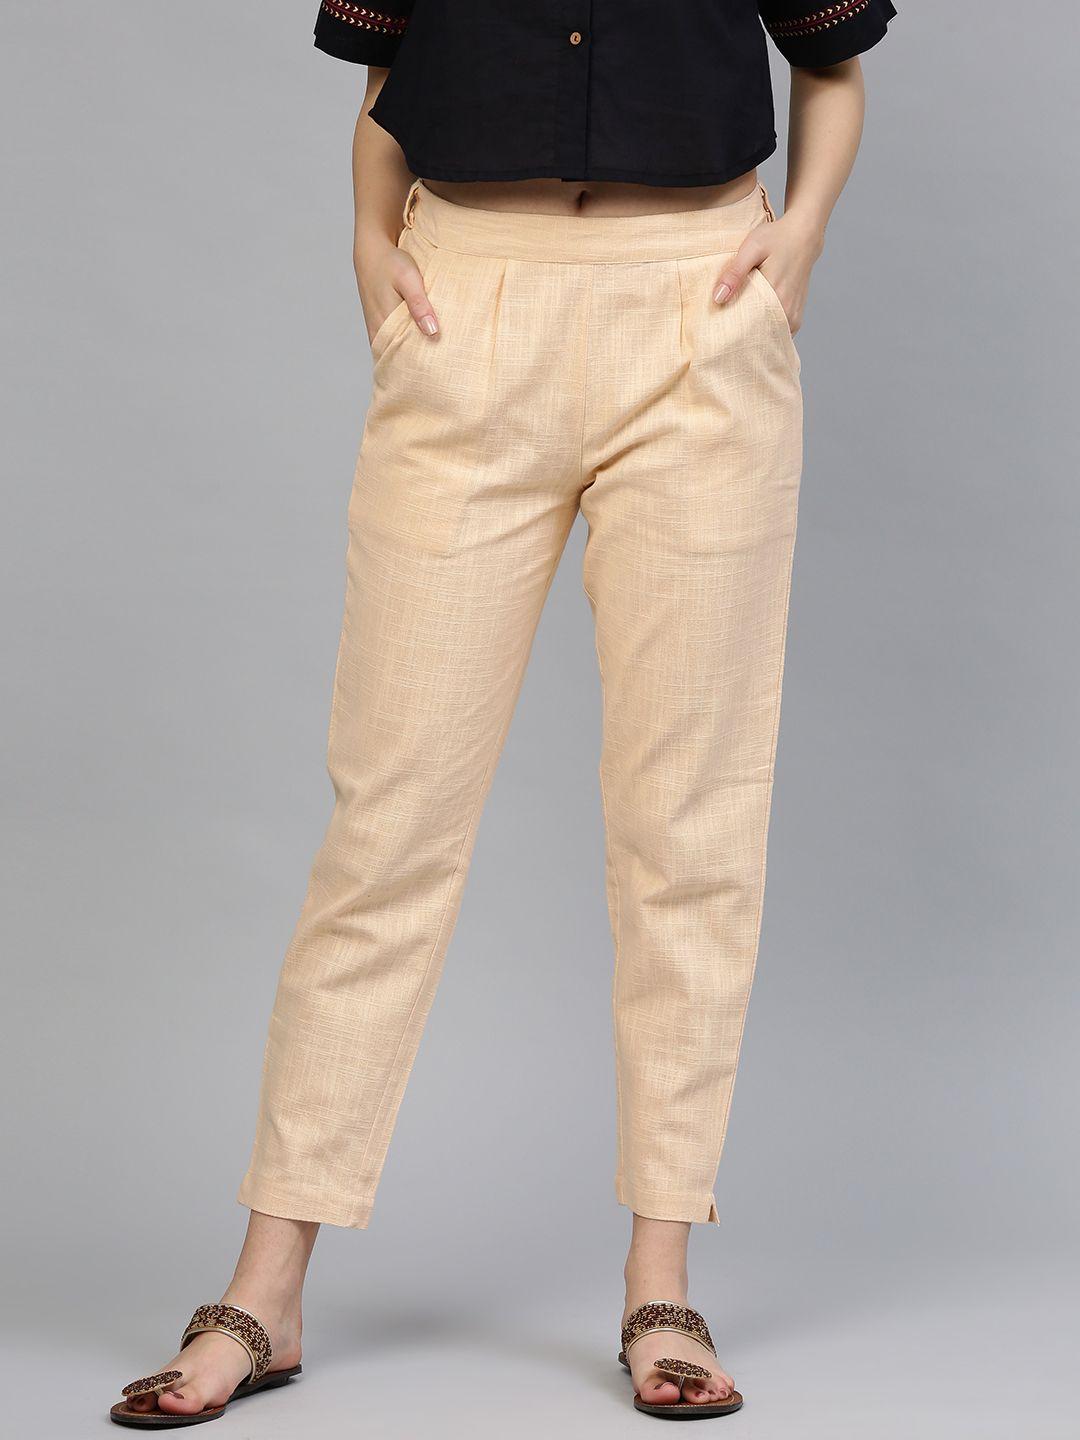 jaipur-kurti-women-beige-cropped-trousers